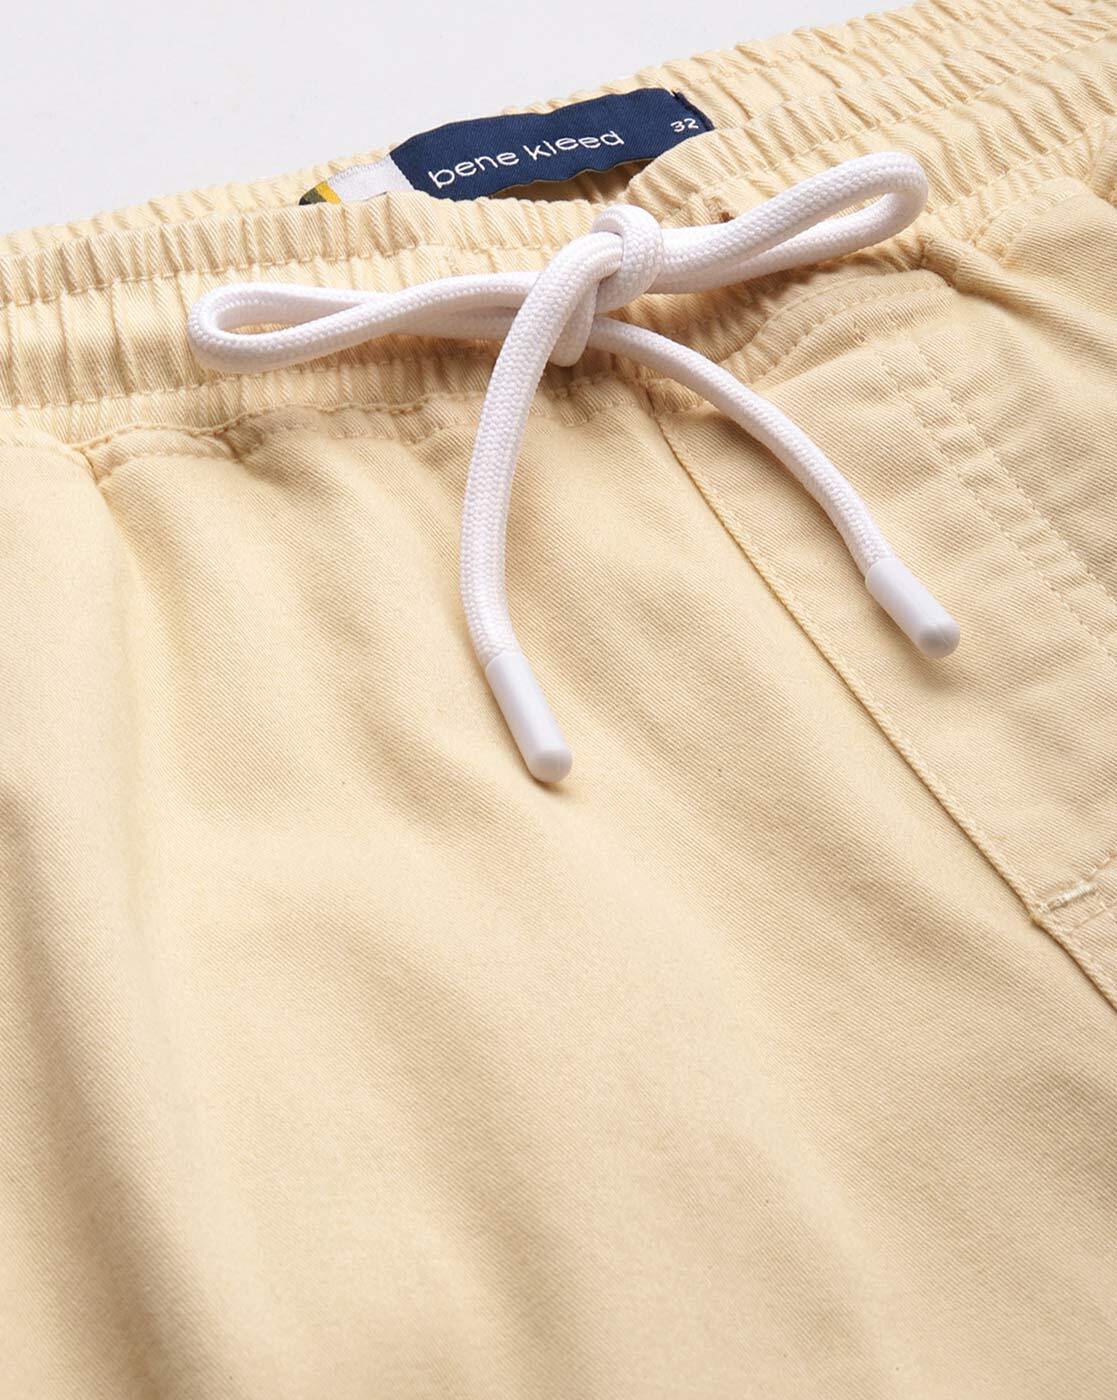 Buy Beige Trousers & Pants for Men by BENE KLEED Online